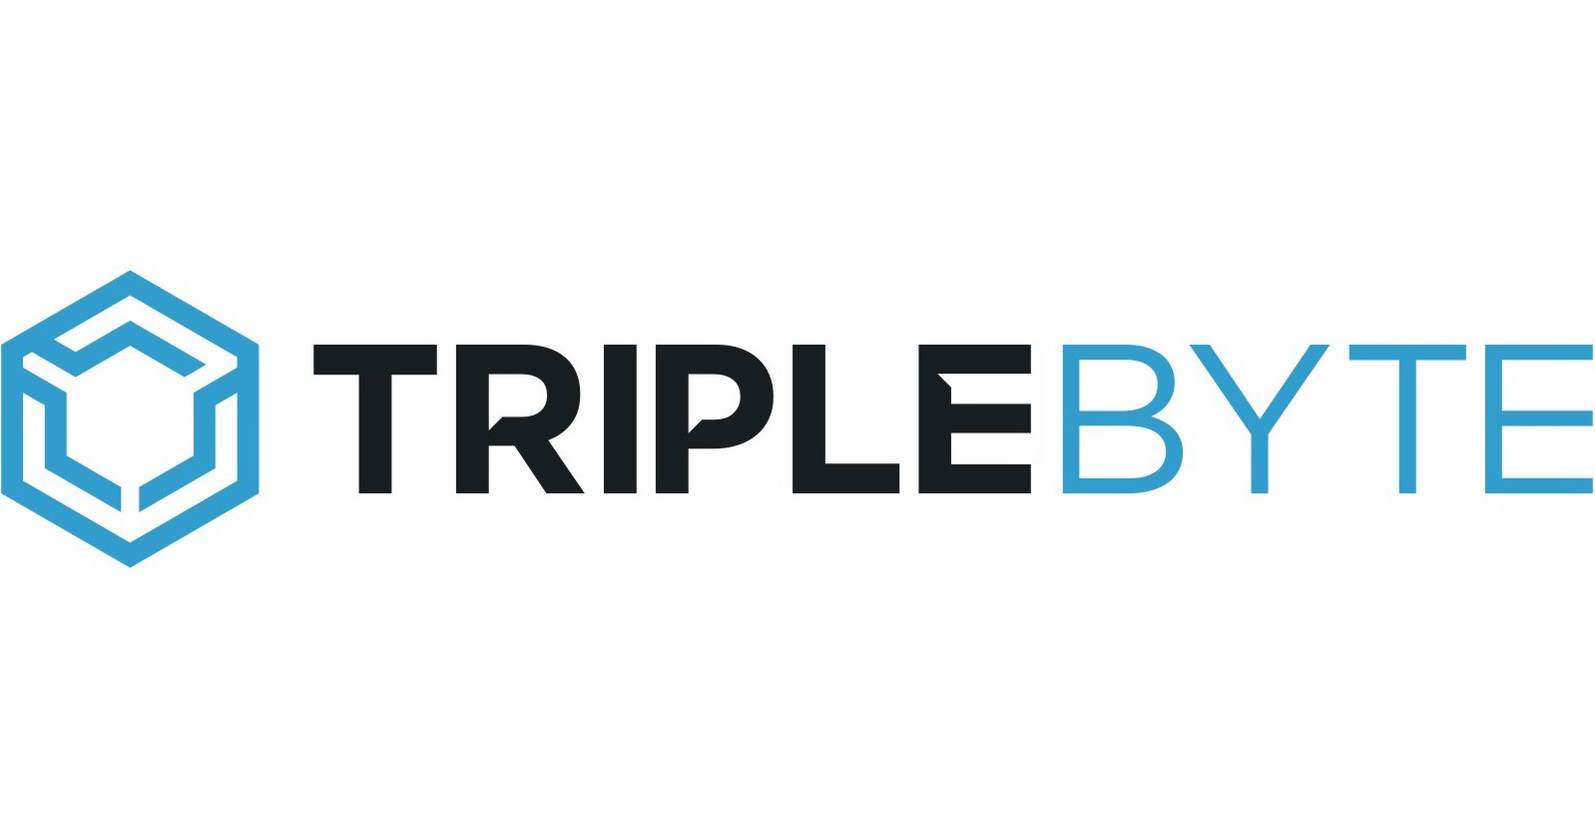 Triplebyte logo